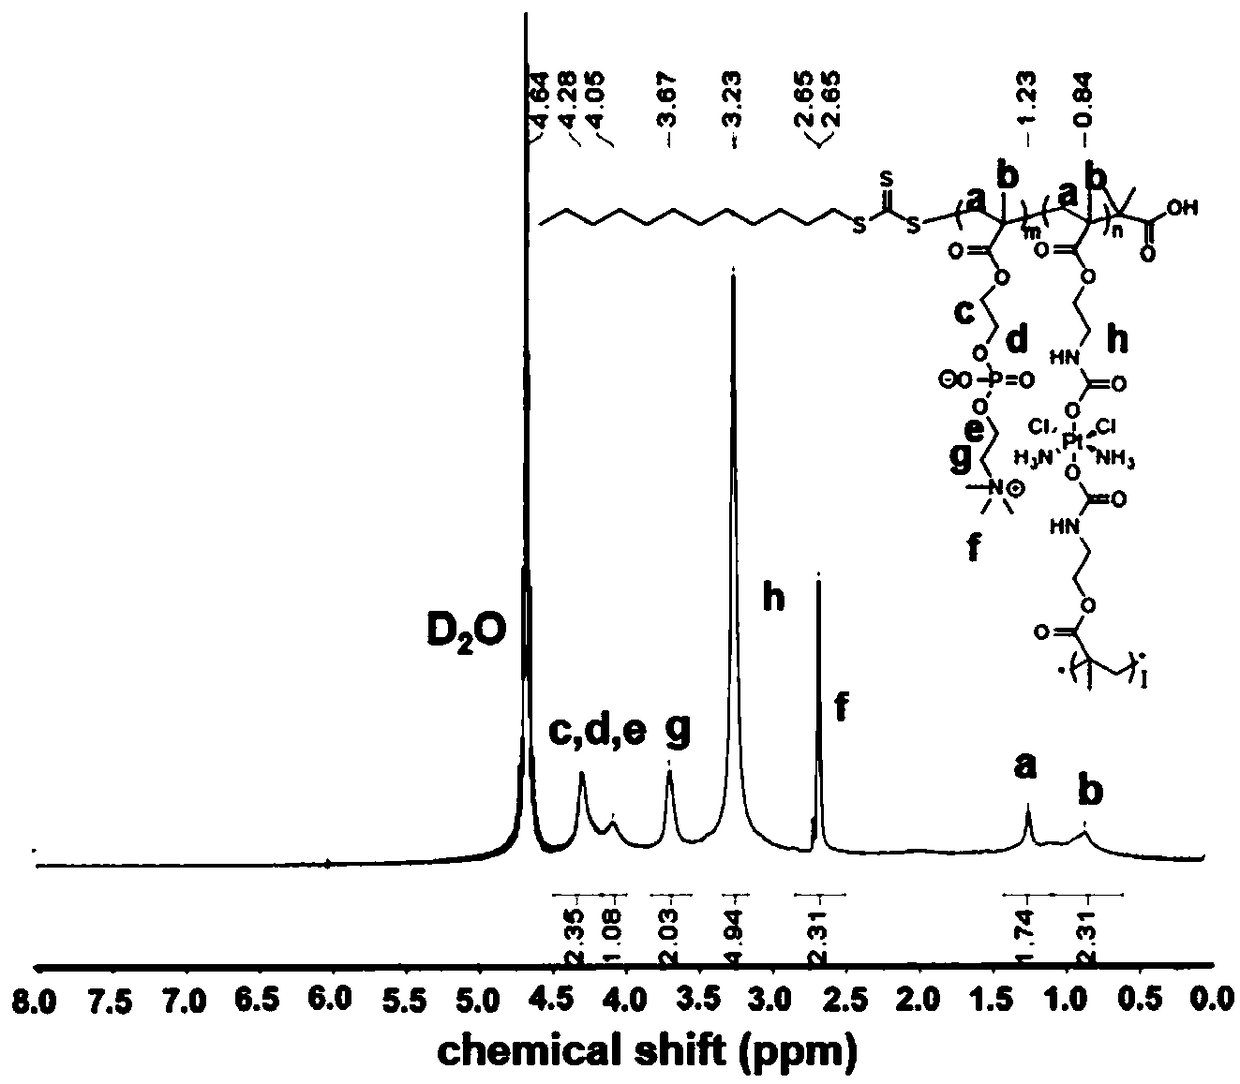 Combined use of tetravalent cisplatin predrug and biological reducing drug